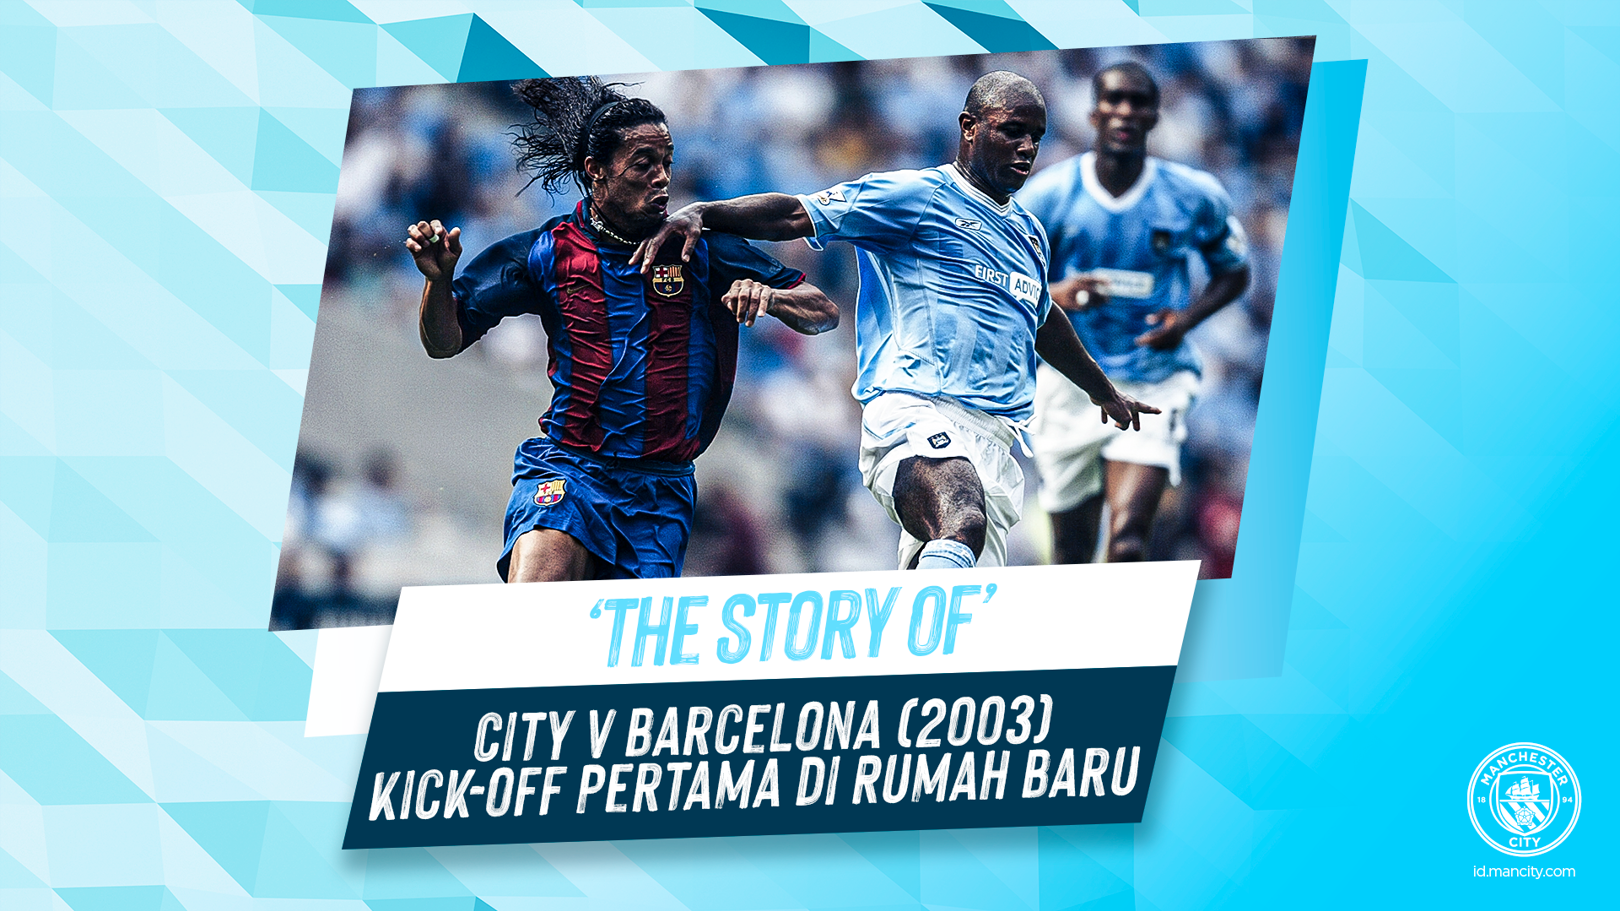 The Story of: City v Barcelona (2003): Kick-off Pertama di Rumah Baru